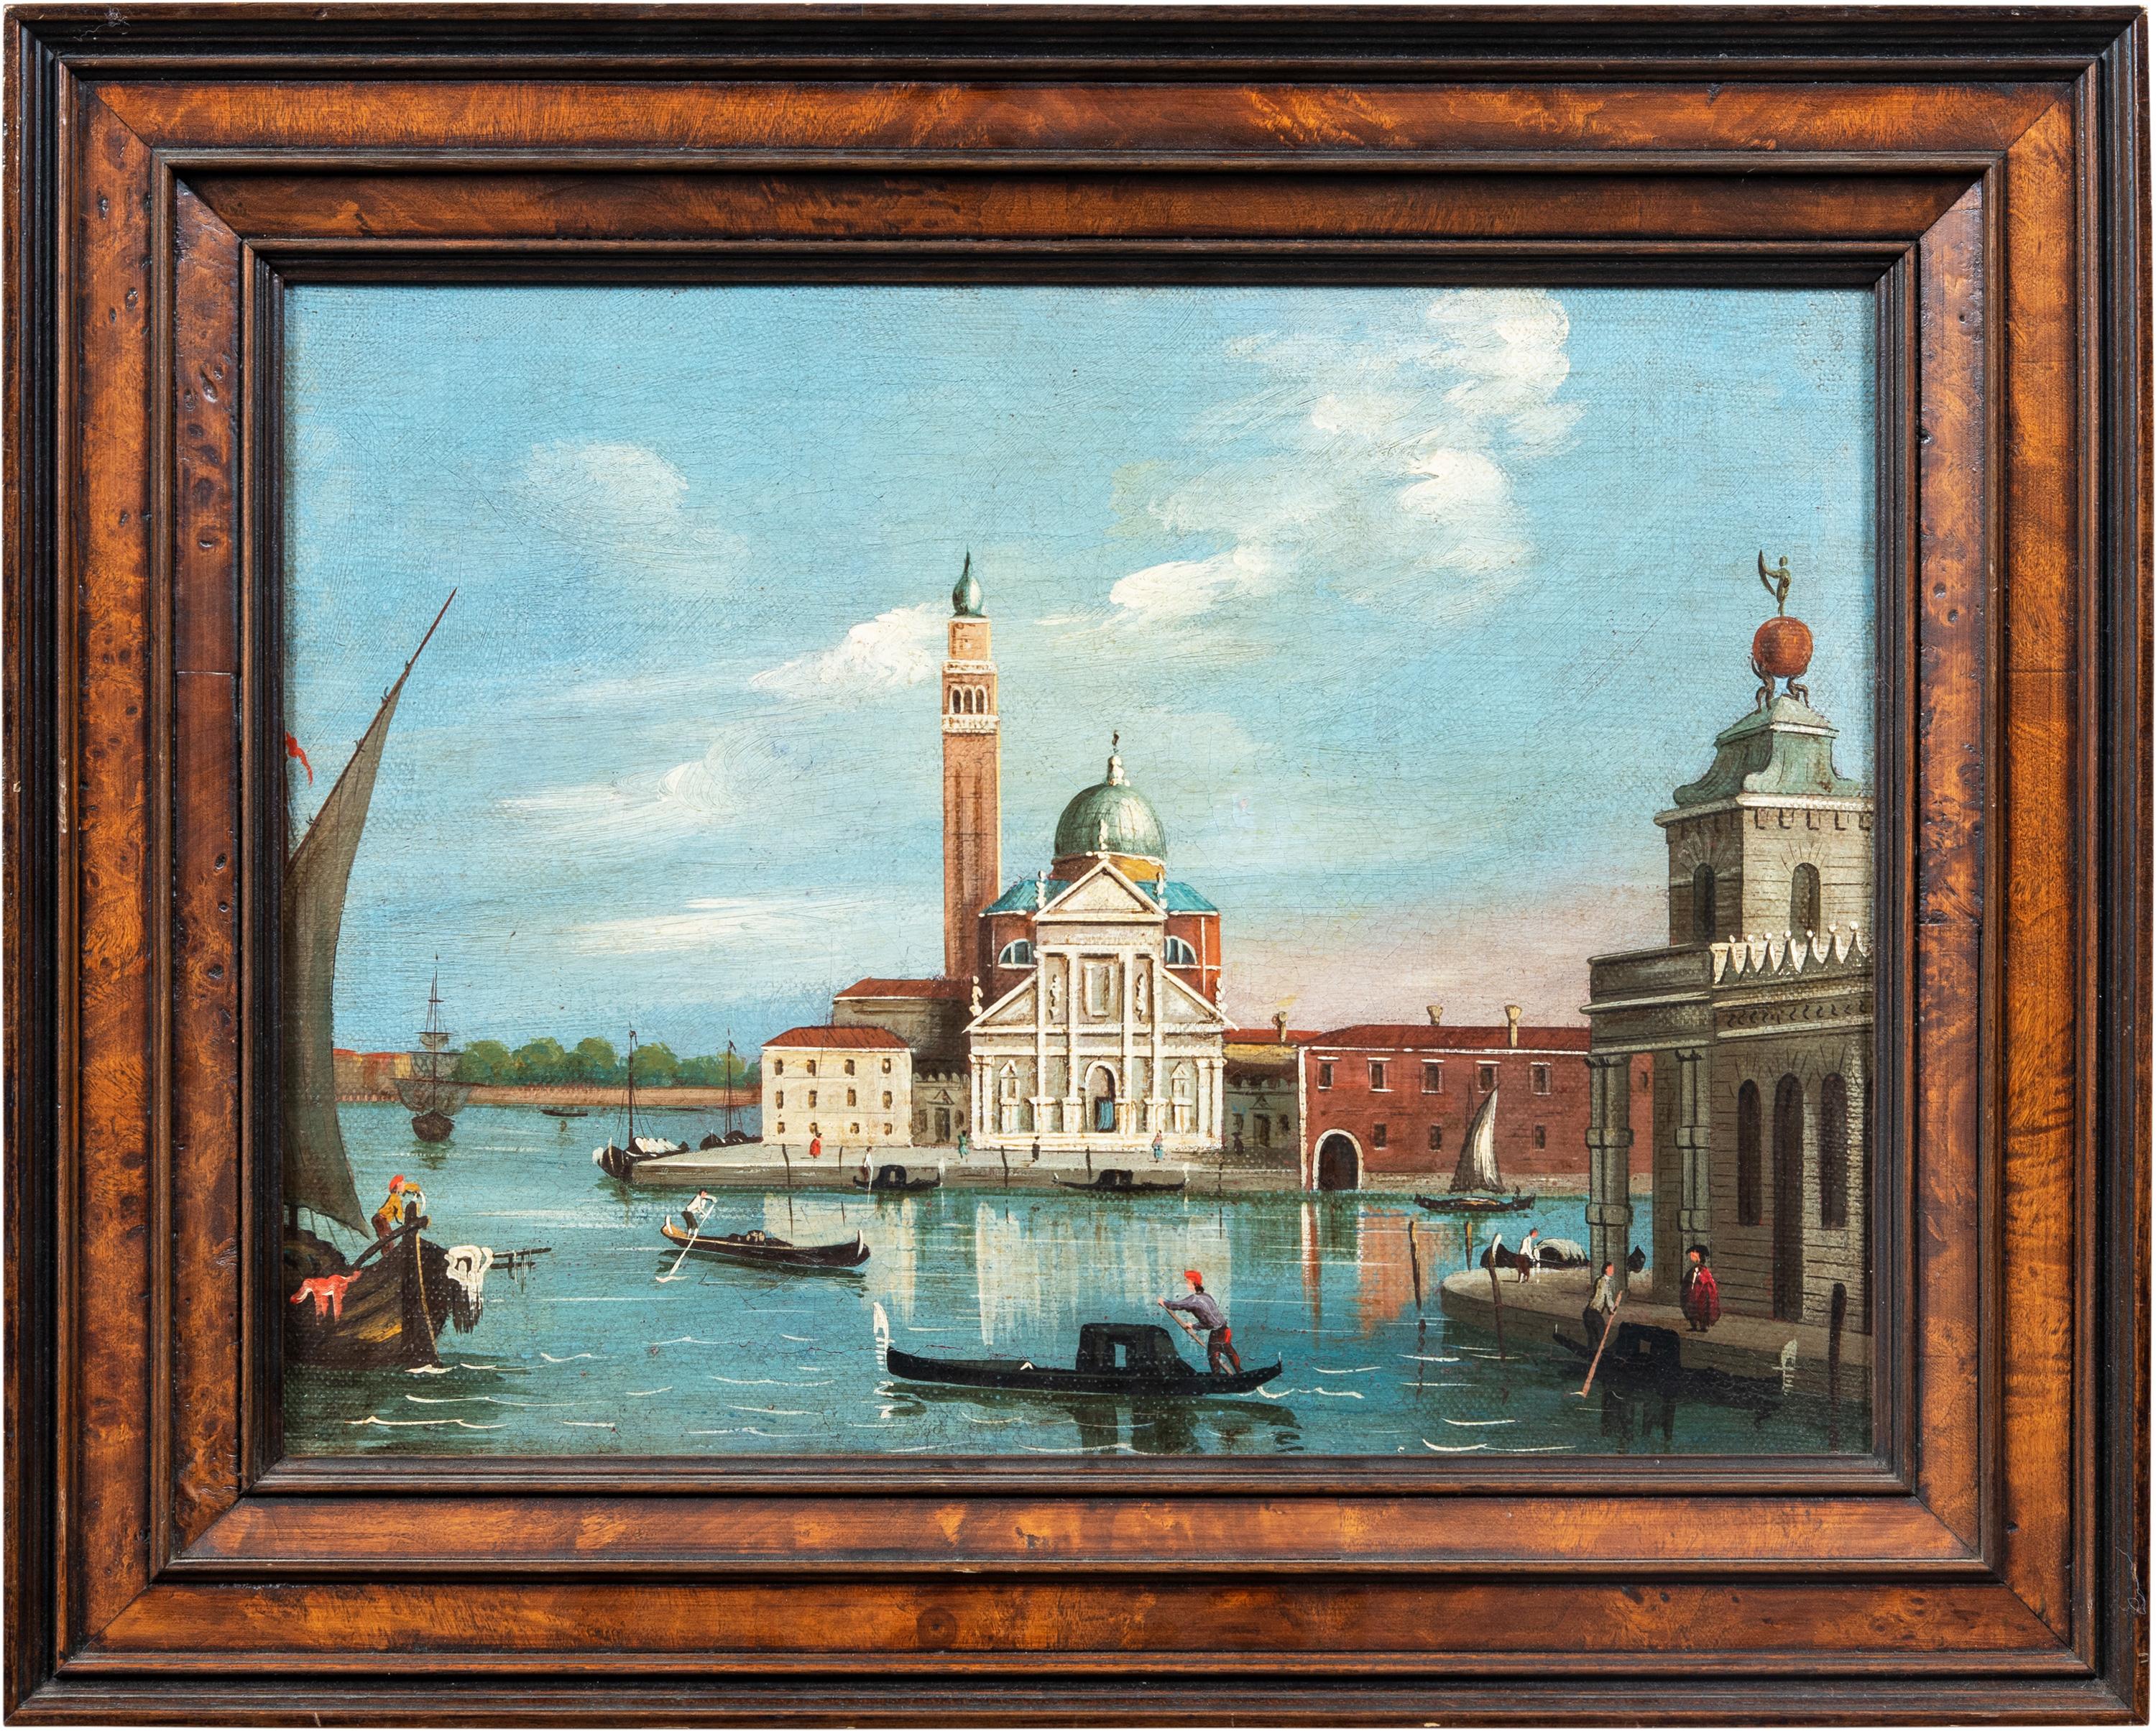 Venetian vedutist (Canaletto follower) - Late 19th century painting - Venice